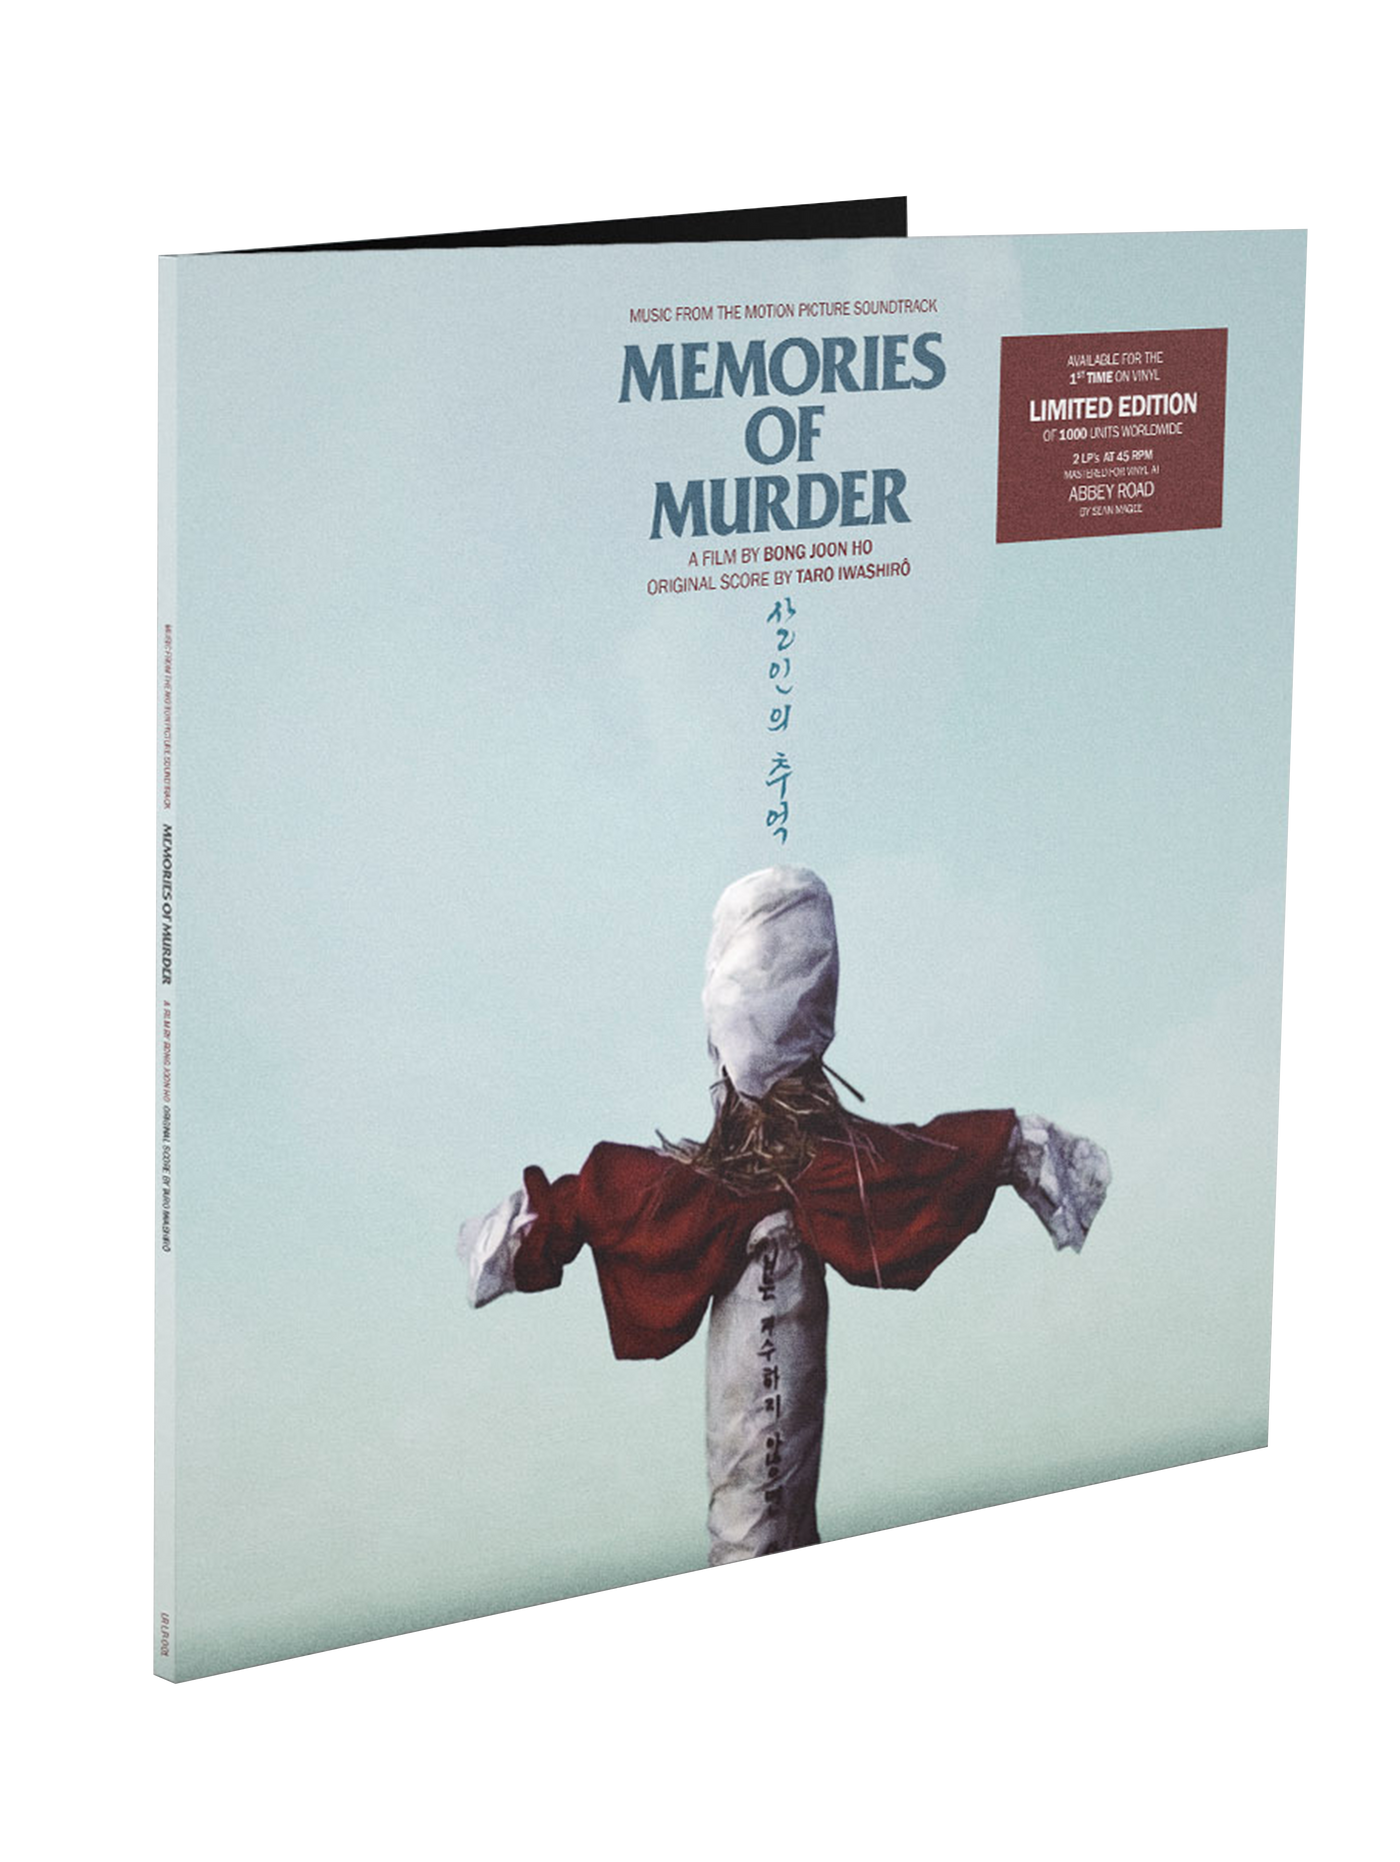 Vinyle "Memories of Murder"